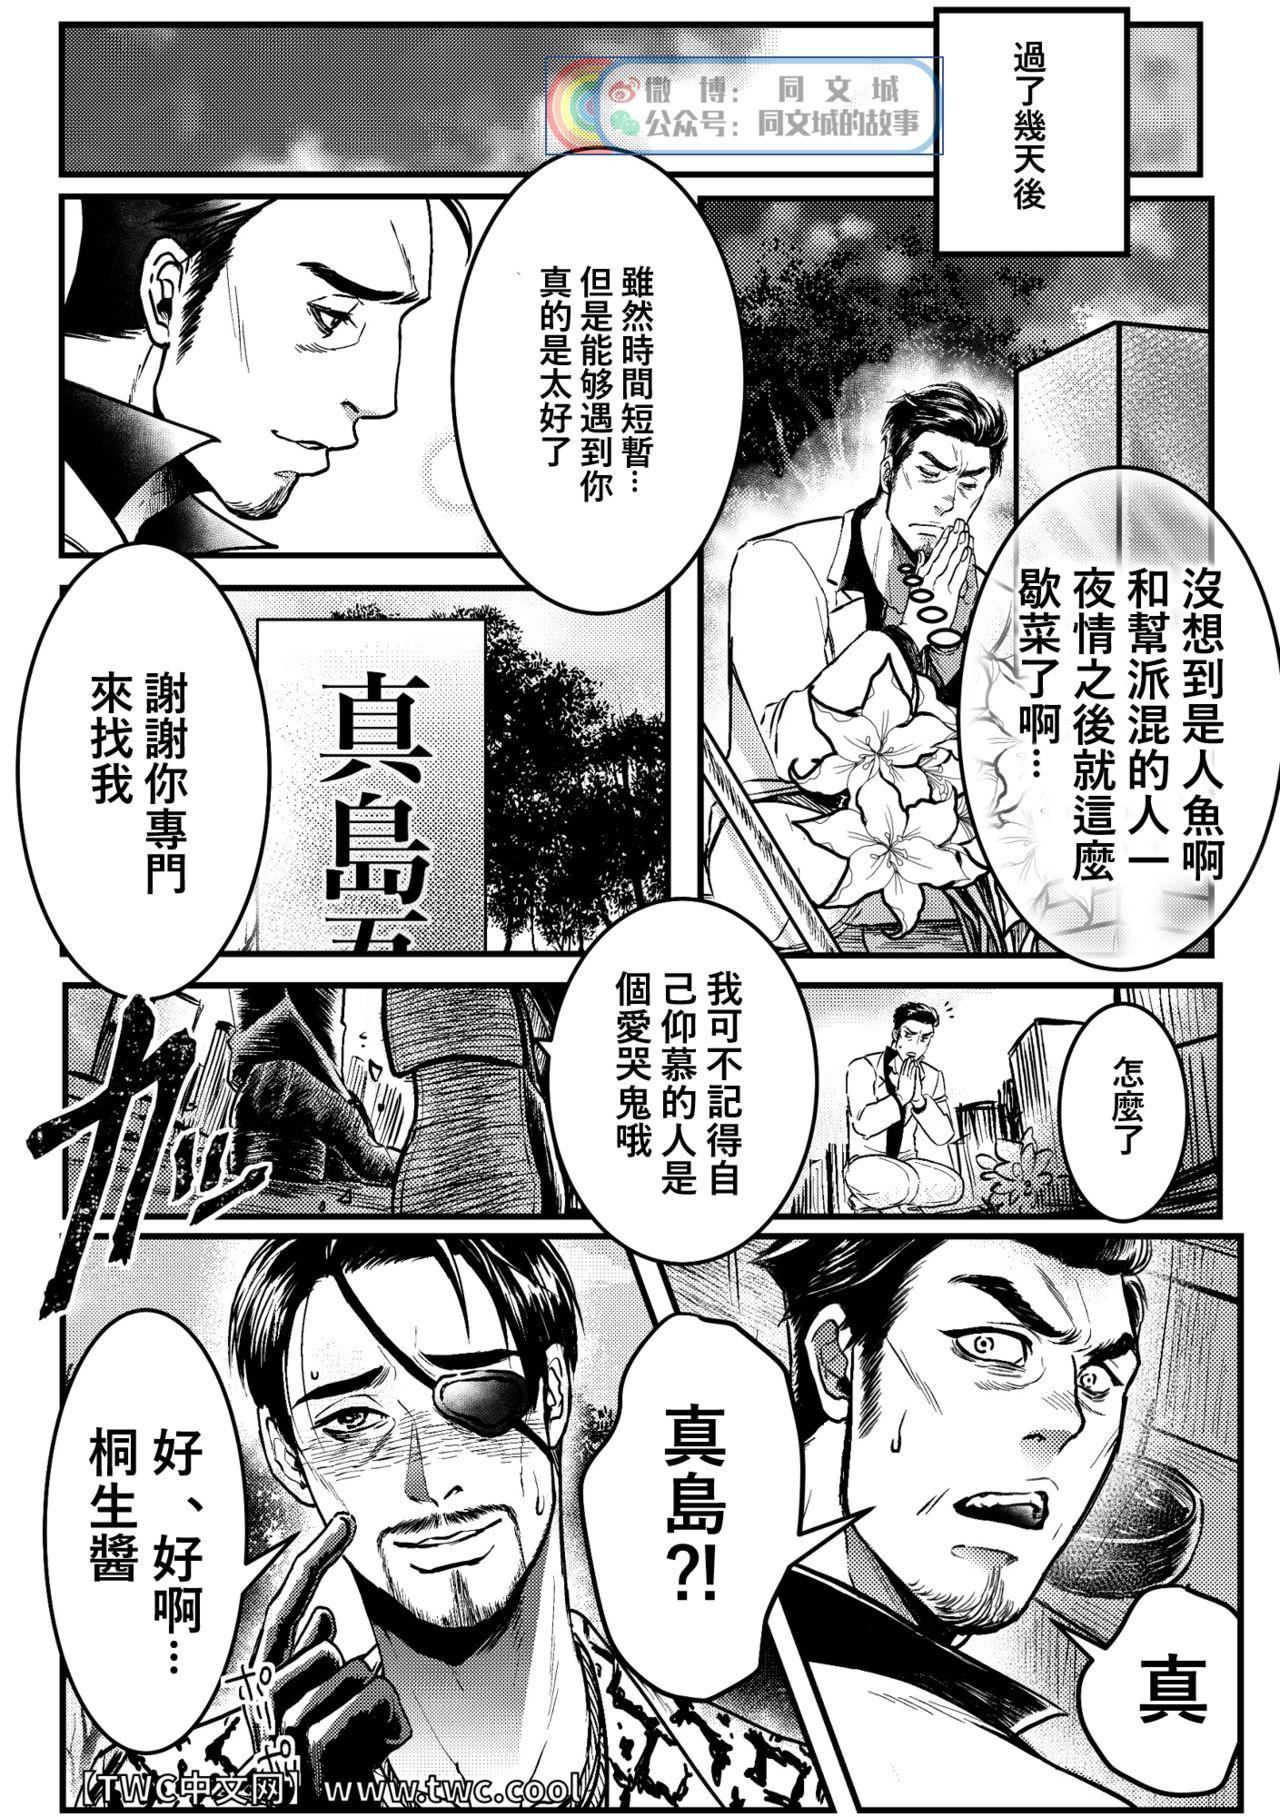 Red Head Gokudou Ningyo Majima - Ryu ga gotoku | yakuza Neighbor - Page 29